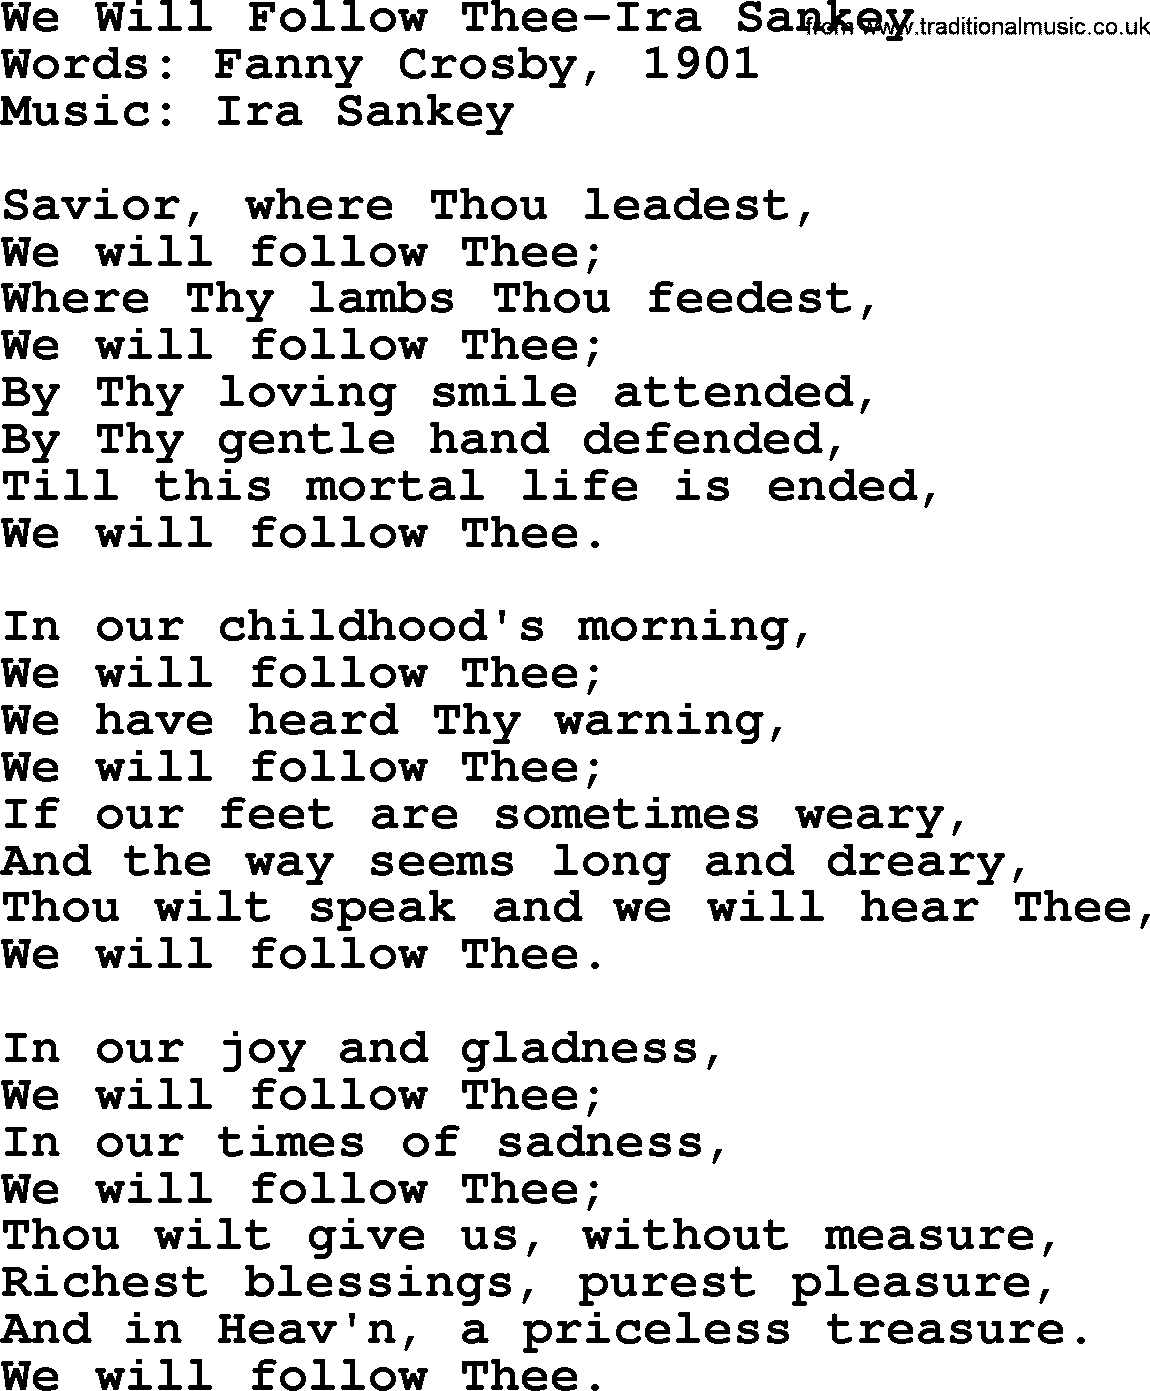 Ira Sankey hymn: We Will Follow Thee-Ira Sankey, lyrics